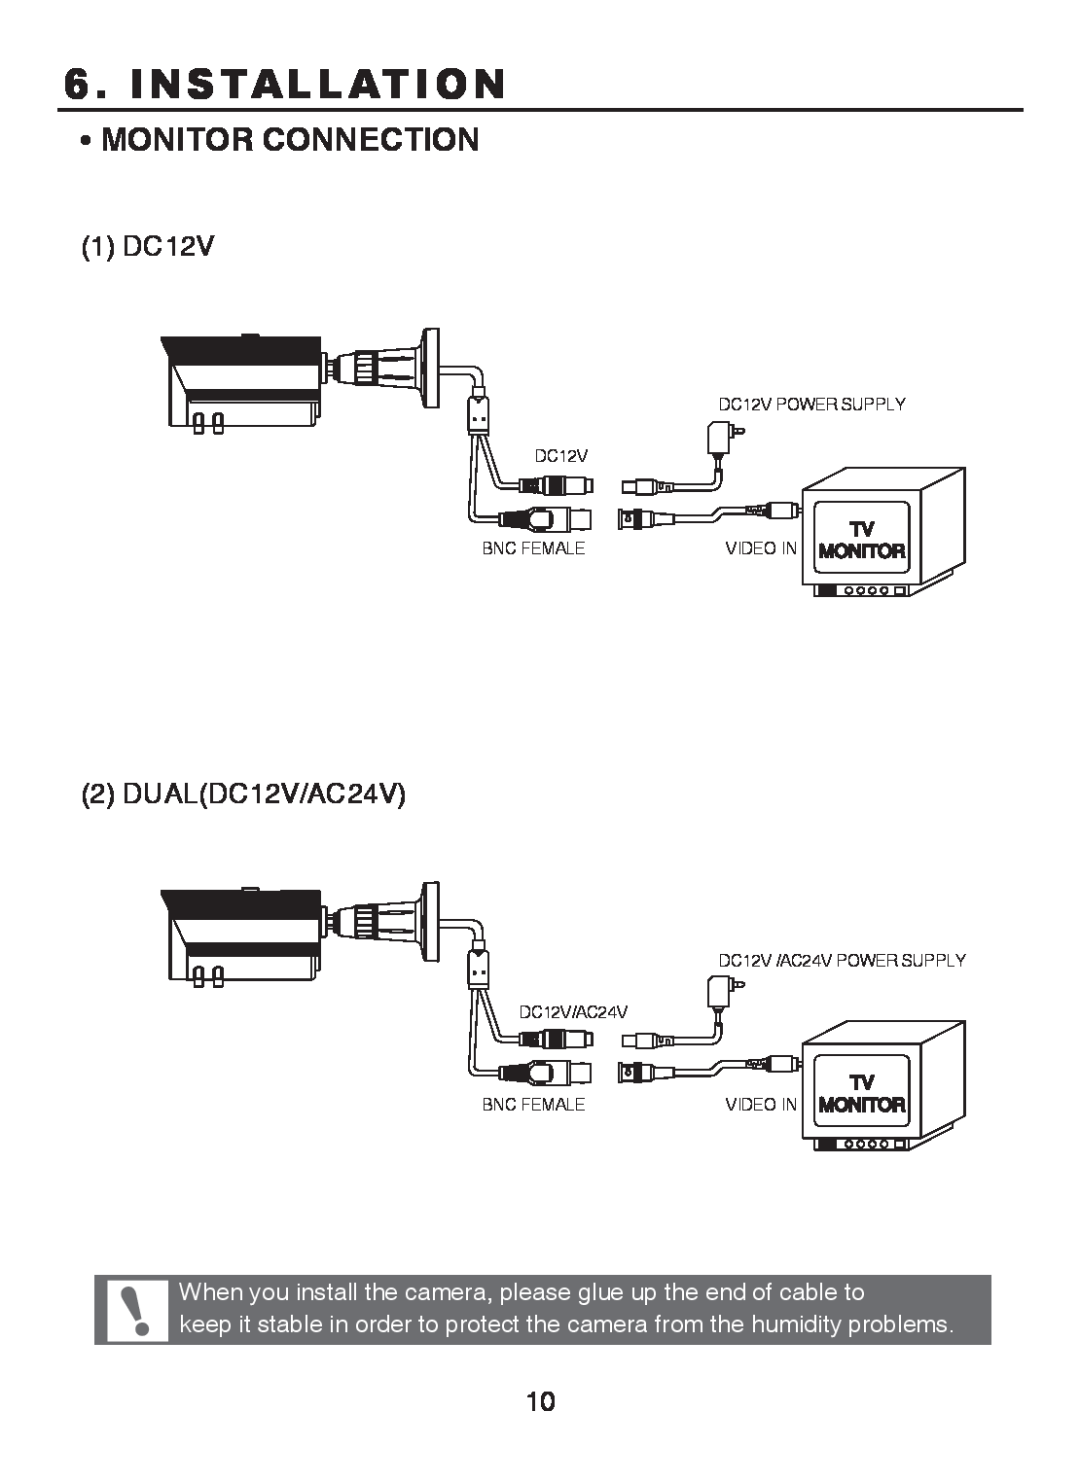 EverFocus M107-N501-001 operation manual Monitor Connection, 1 DC12V, DUALDC12V/AC24V, Installation 